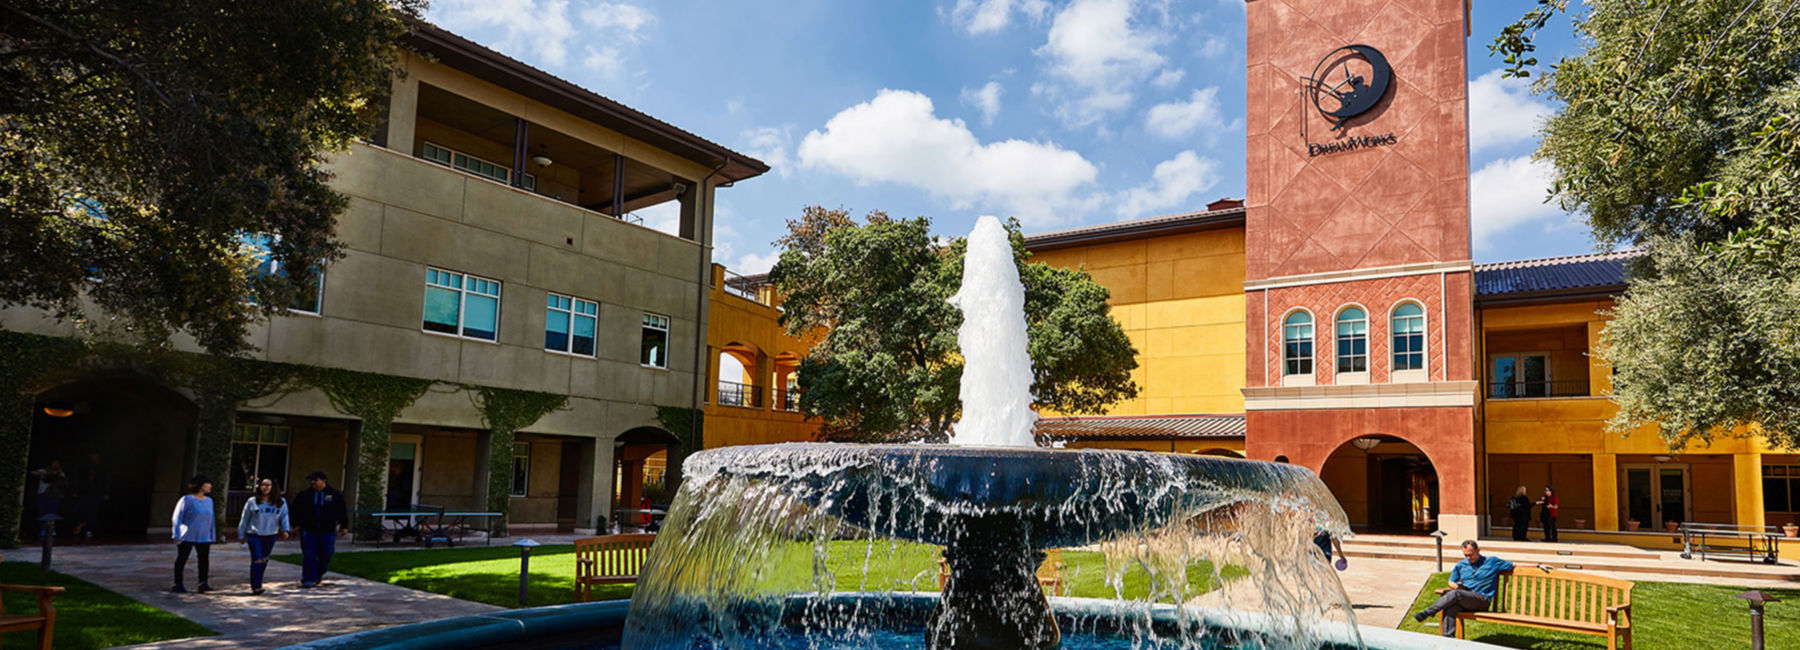 DreamWorks Animation campus